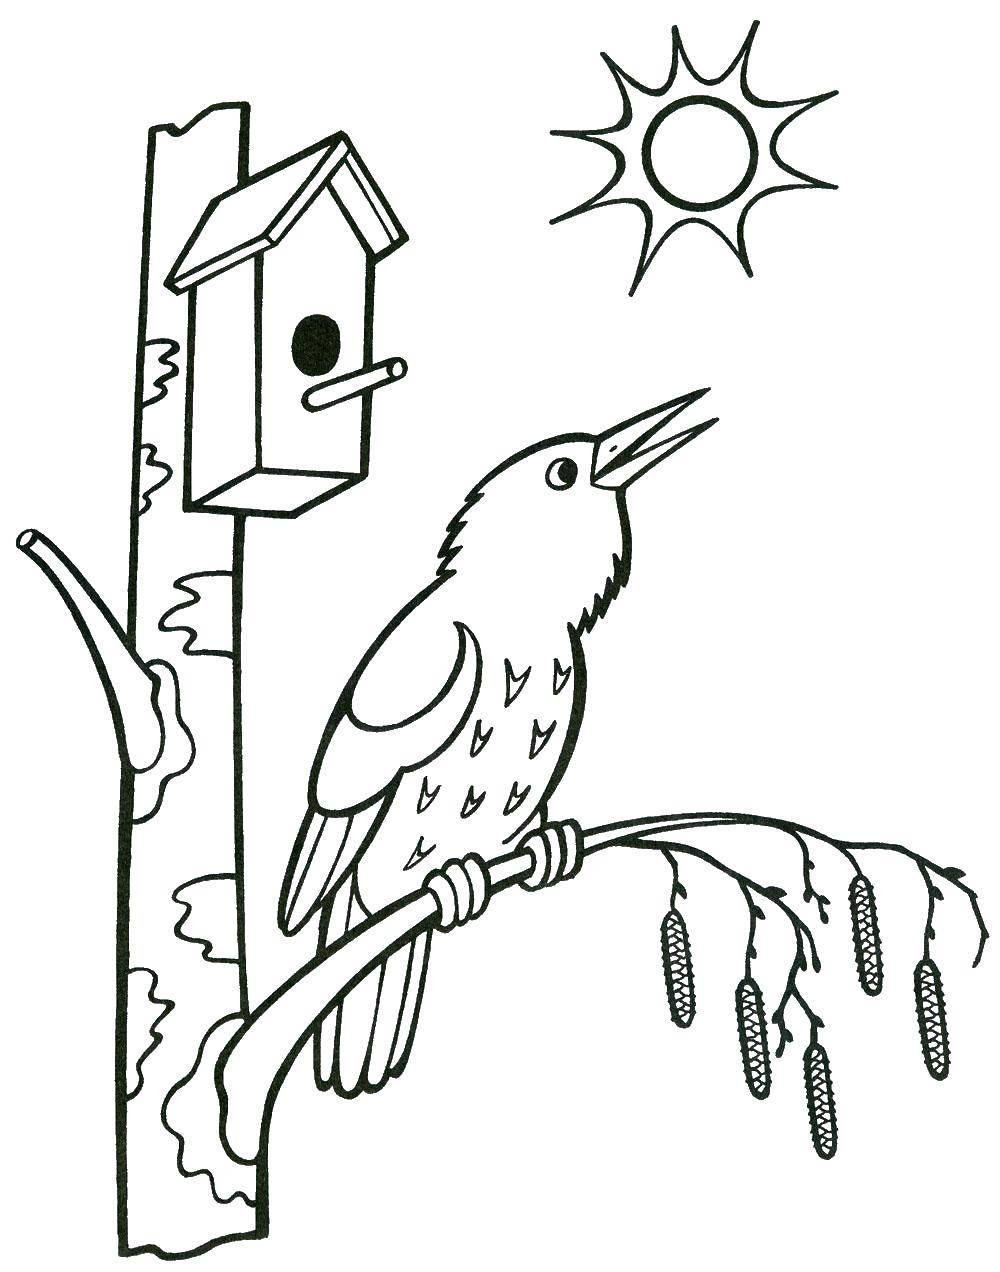 Coloring About the bird of the birdhouse. Category birds. Tags:  birds, birdhouse, sun.